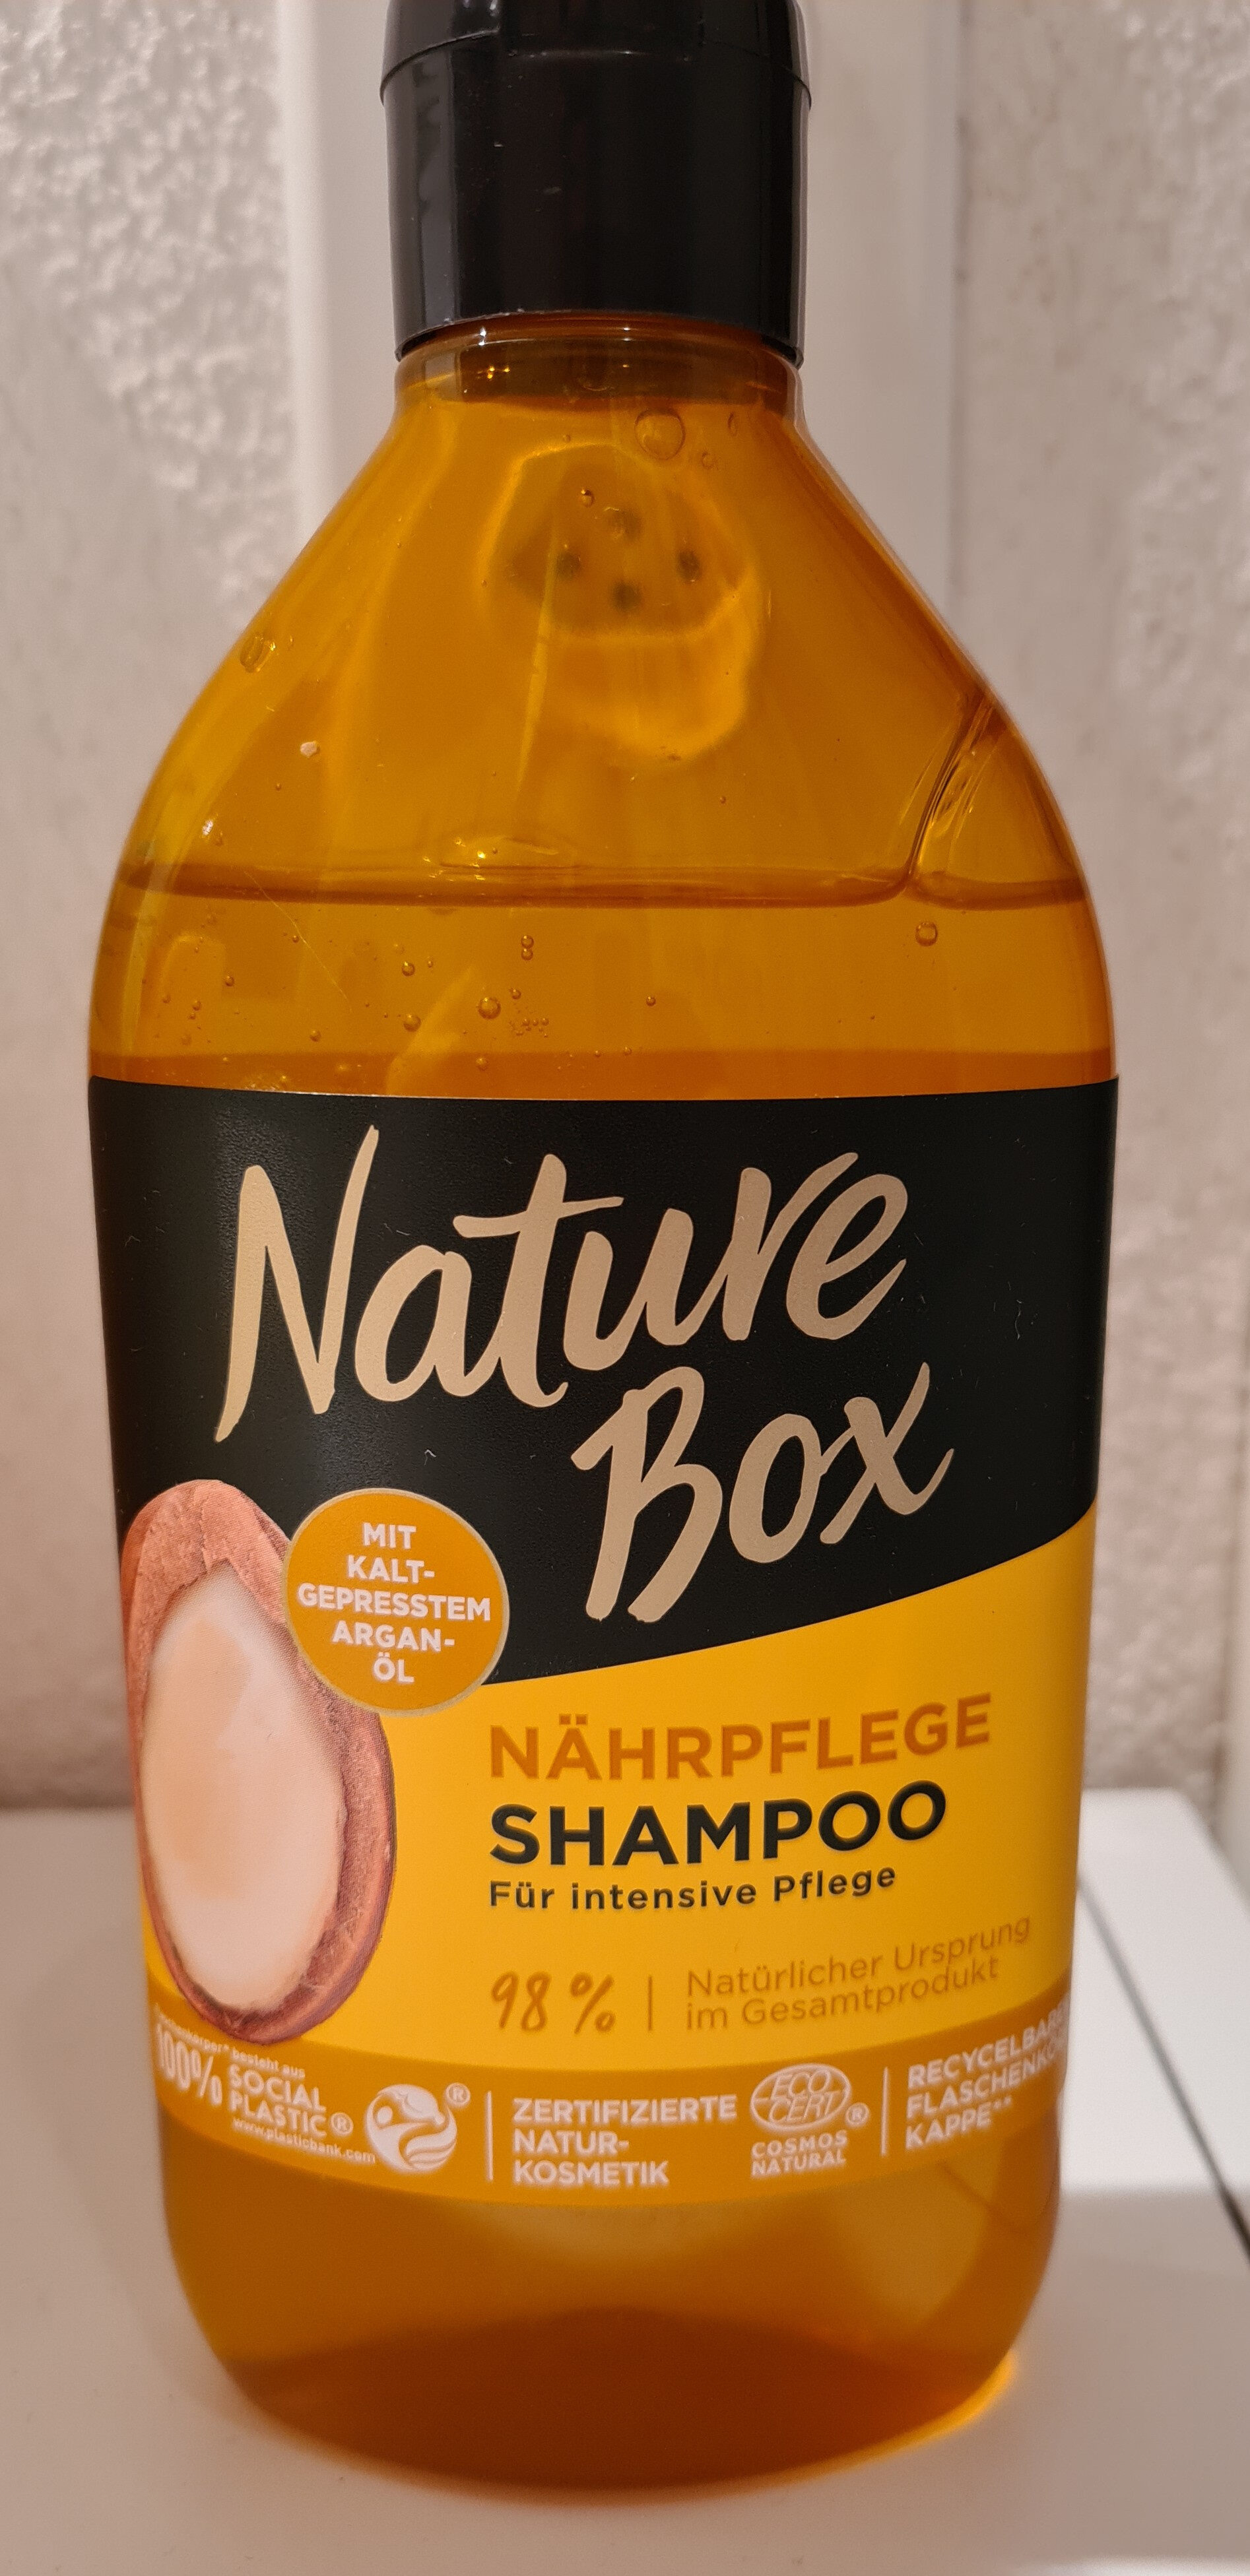 Nature Box Nährpflege Shampoo Für intensive Pflege - Product - en